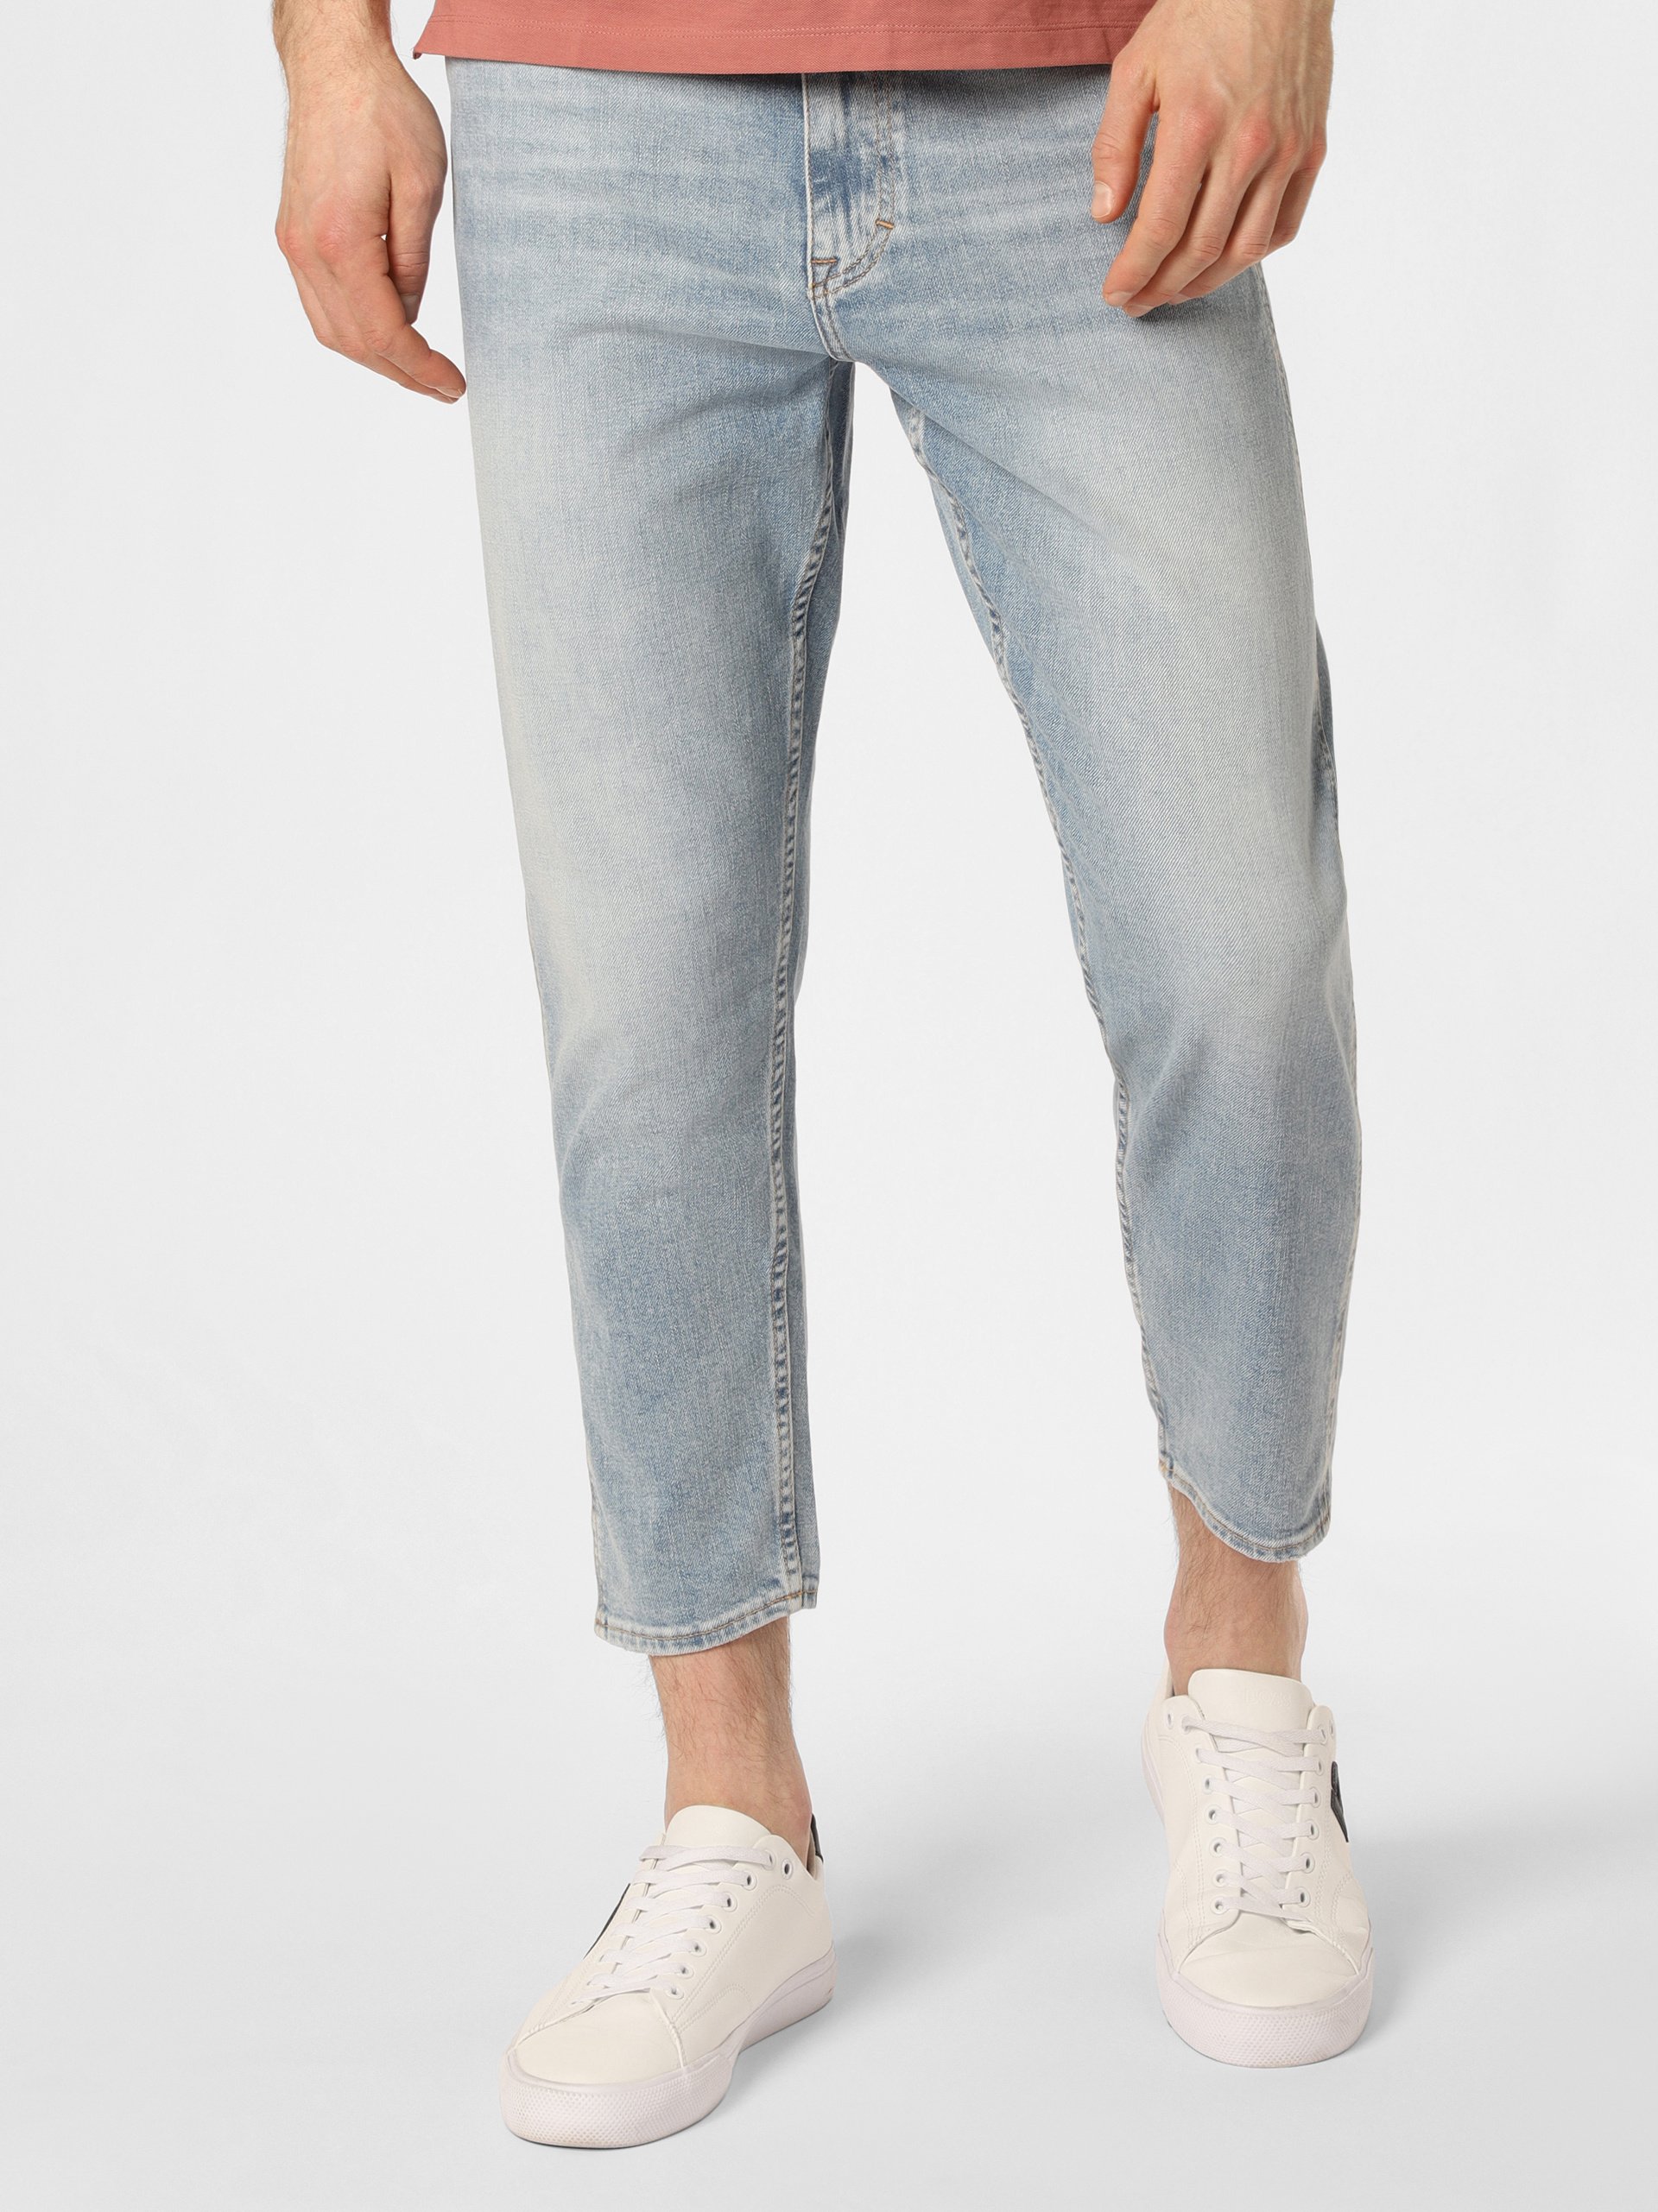 BOSS Orange Herren Jeans - Tatum BC-C POOL online kaufen